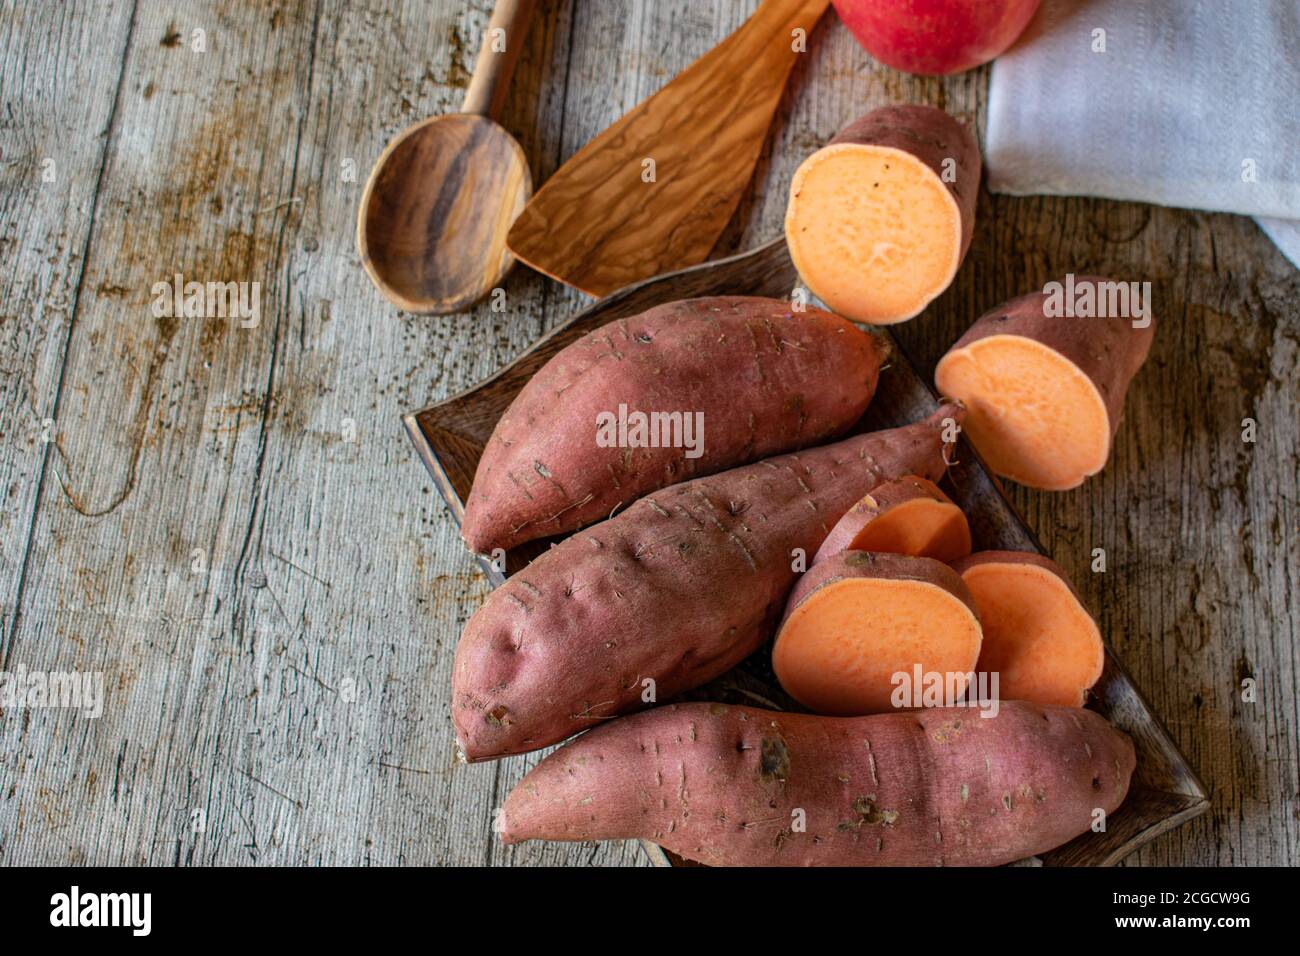 sweet potatoes on wooden table Stock Photo